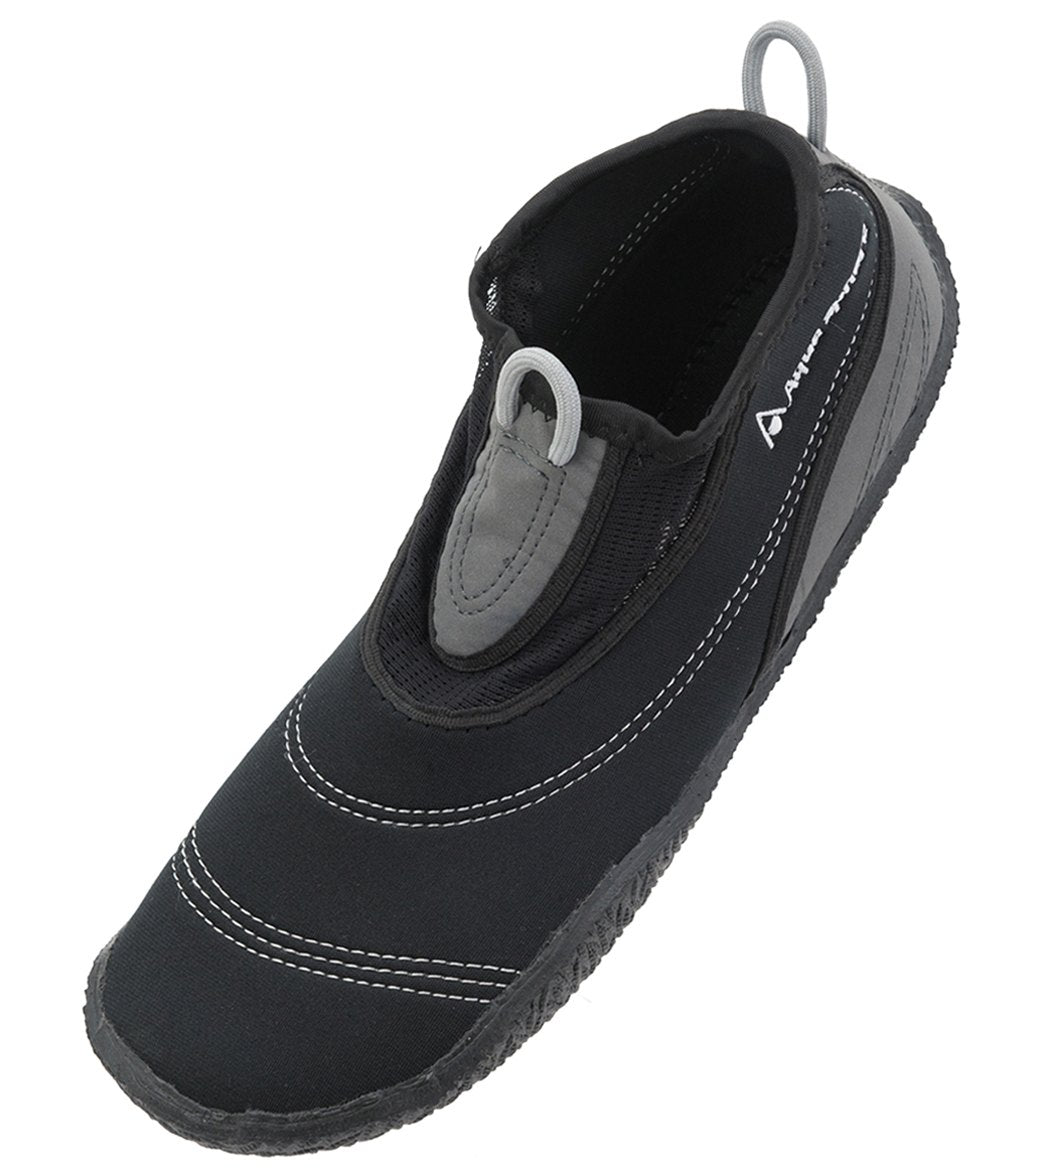 Aqua Sphere Men's Beachwalker Xp Water Shoes - Black/Silver 5 - Swimoutlet.com